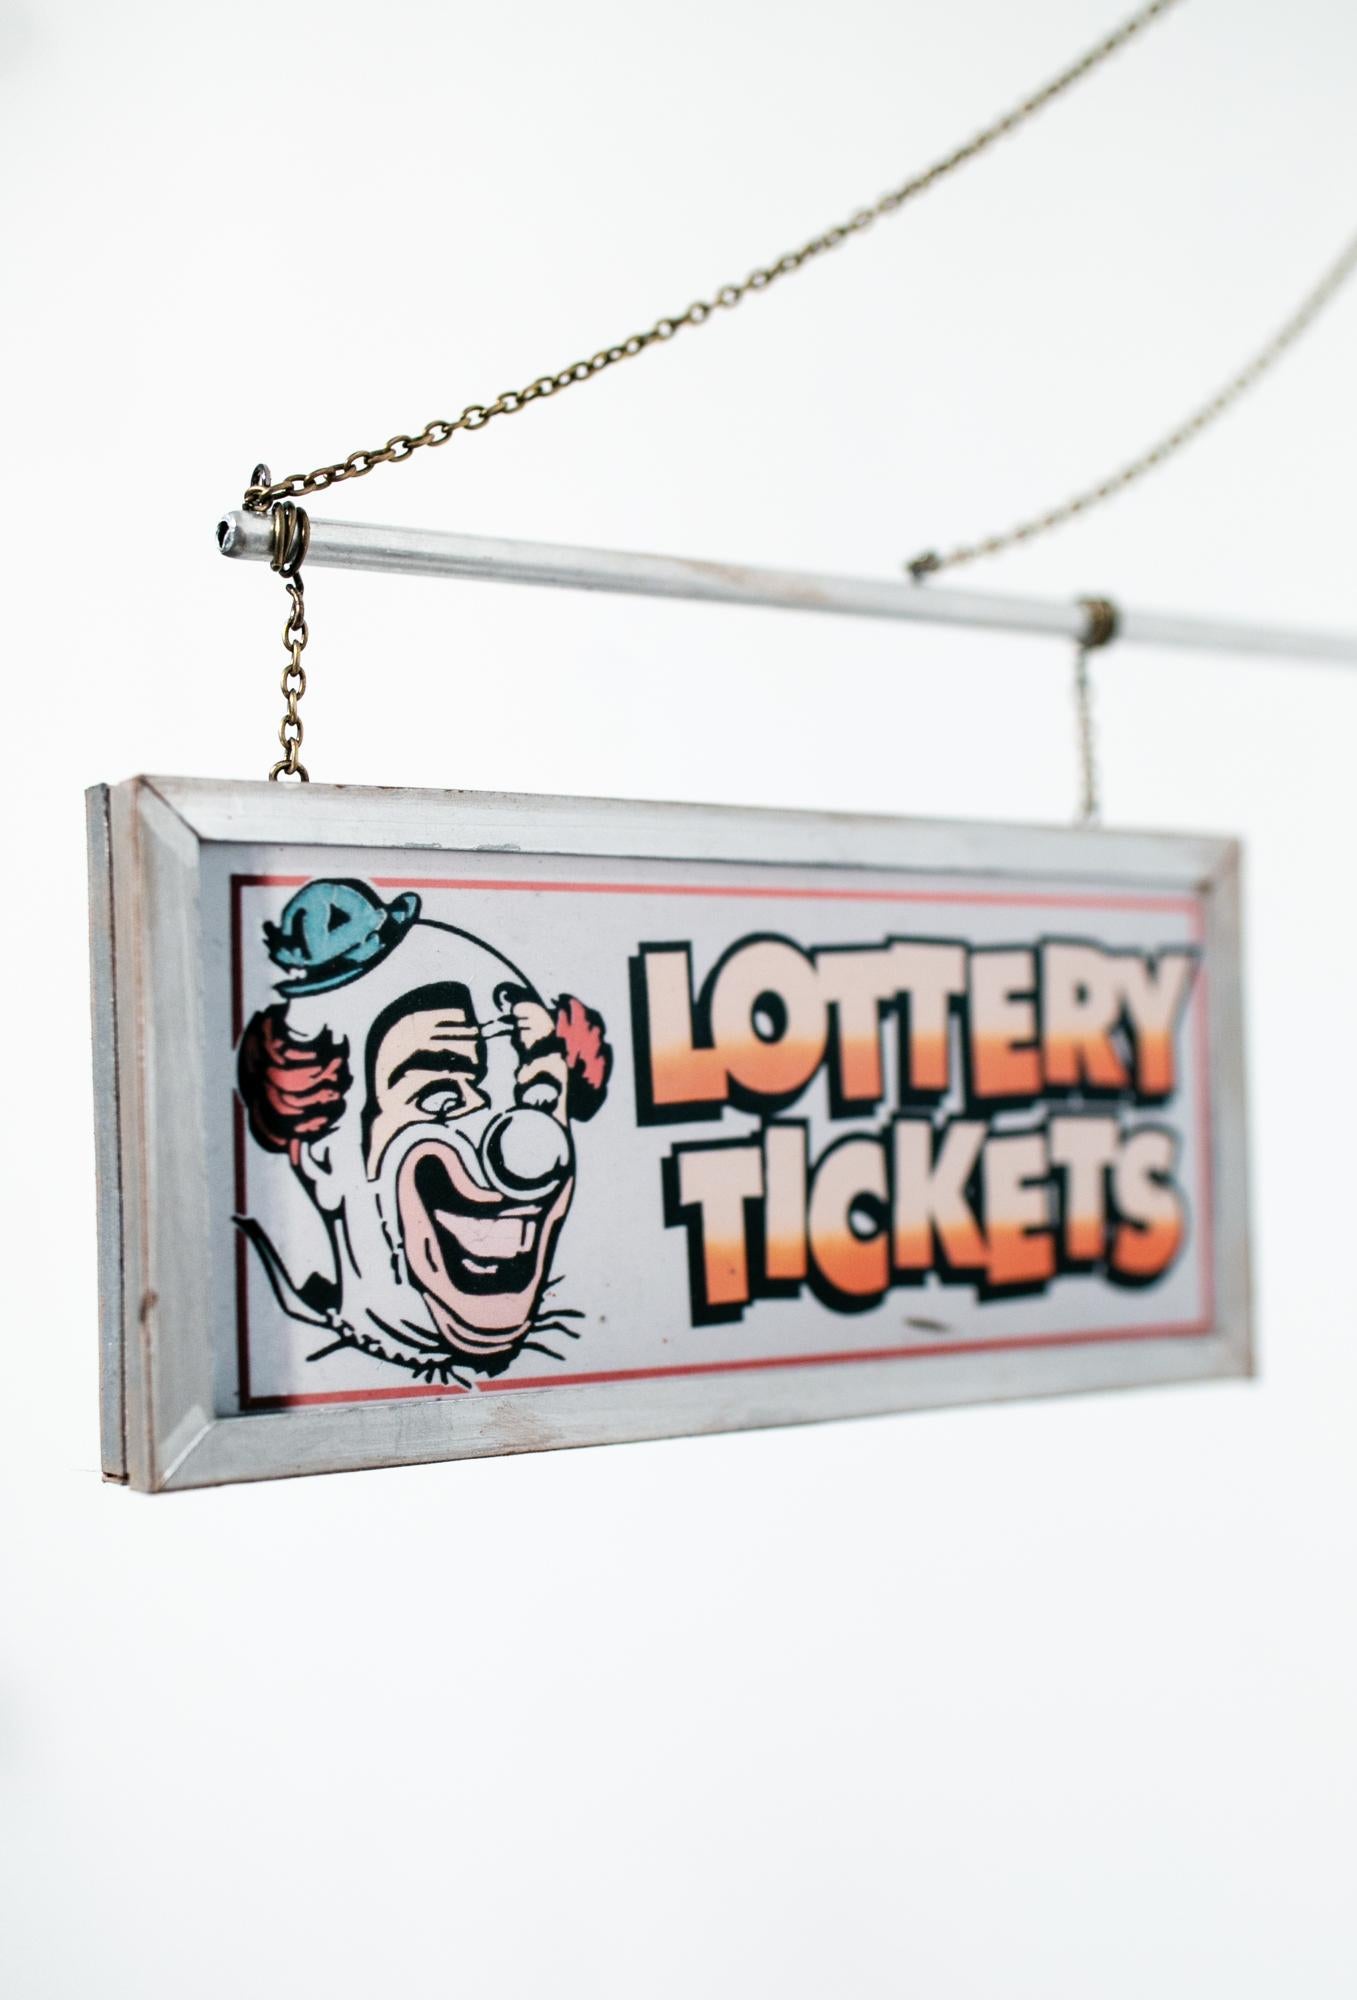 Pete's Lottery Tickets - Contemporary Art by Drew Leshko